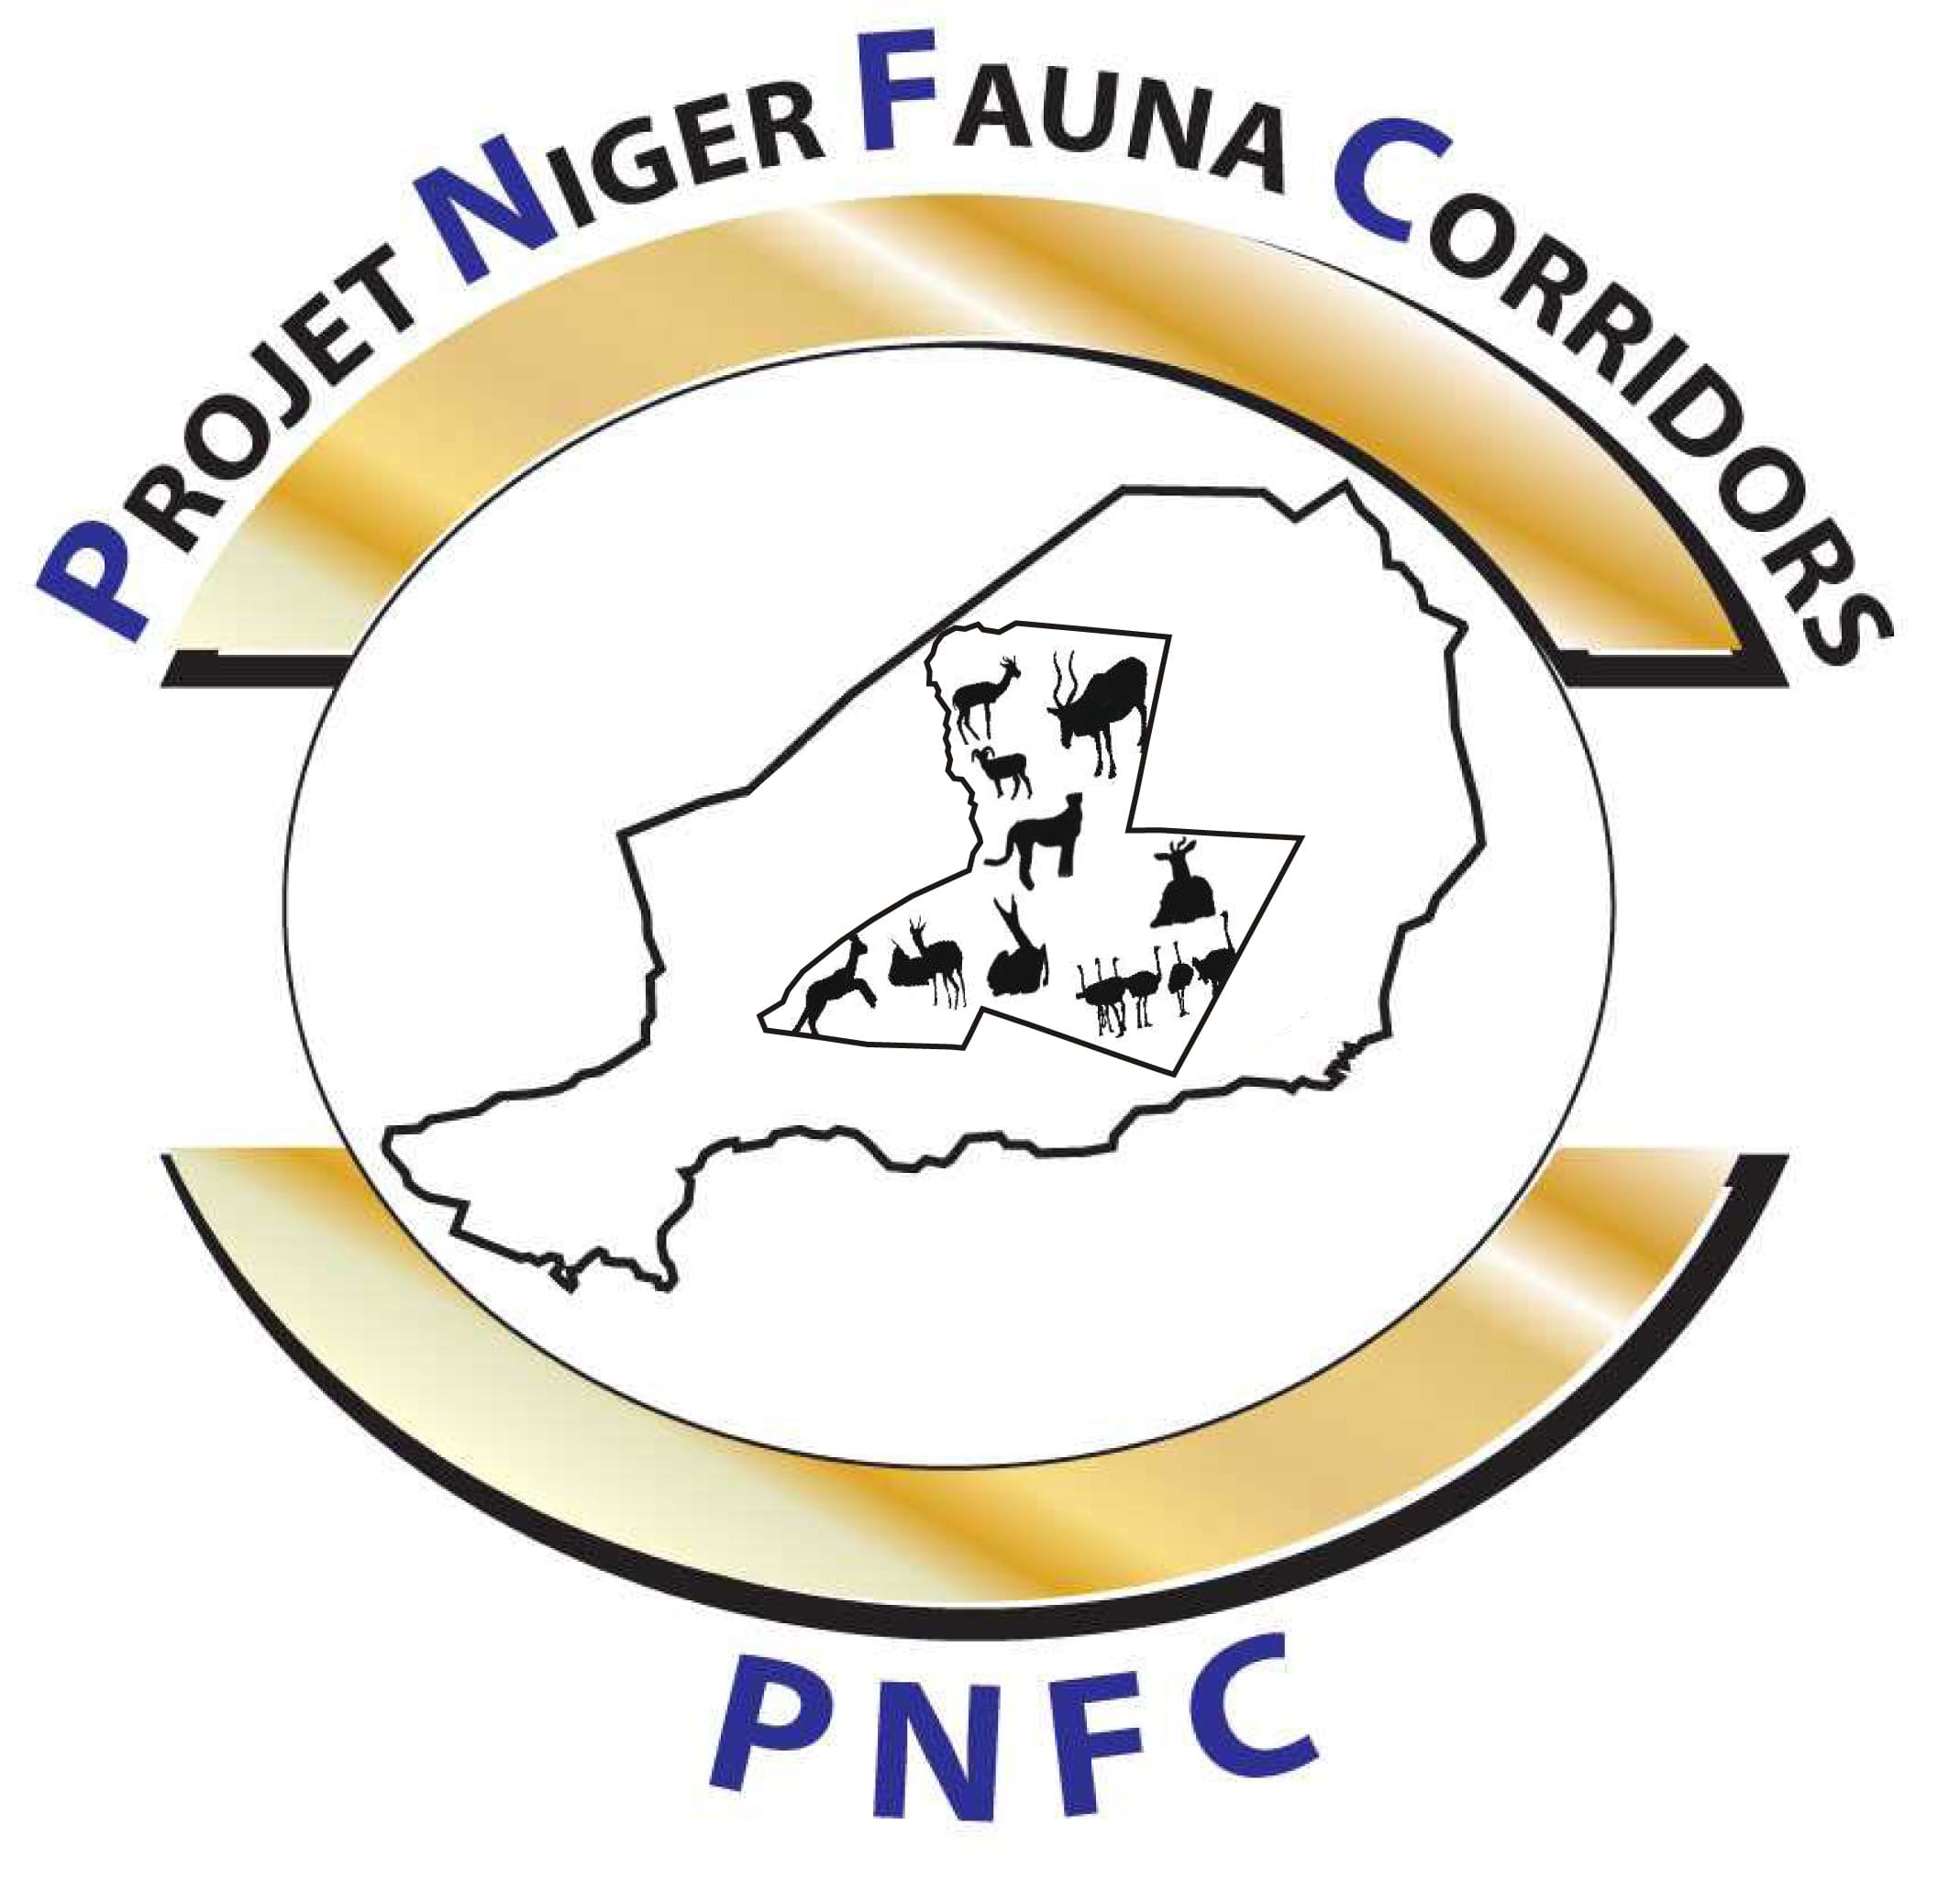 Projet Niger Fauna Corridors (PNFC)